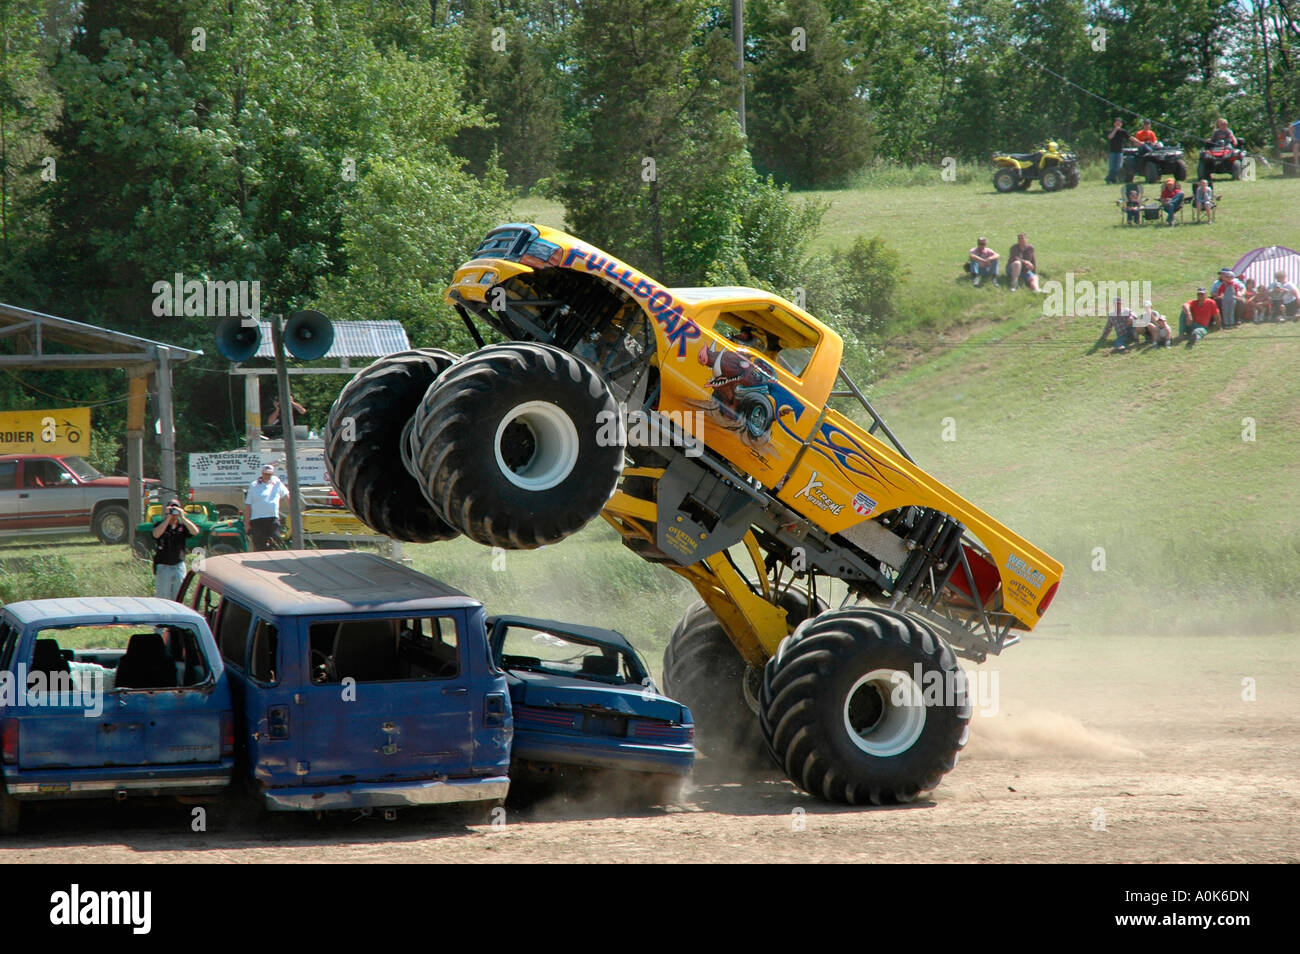 Full Boar Monster Truck Jumping Left 2, Inwood Ontario Canada Stock Photo